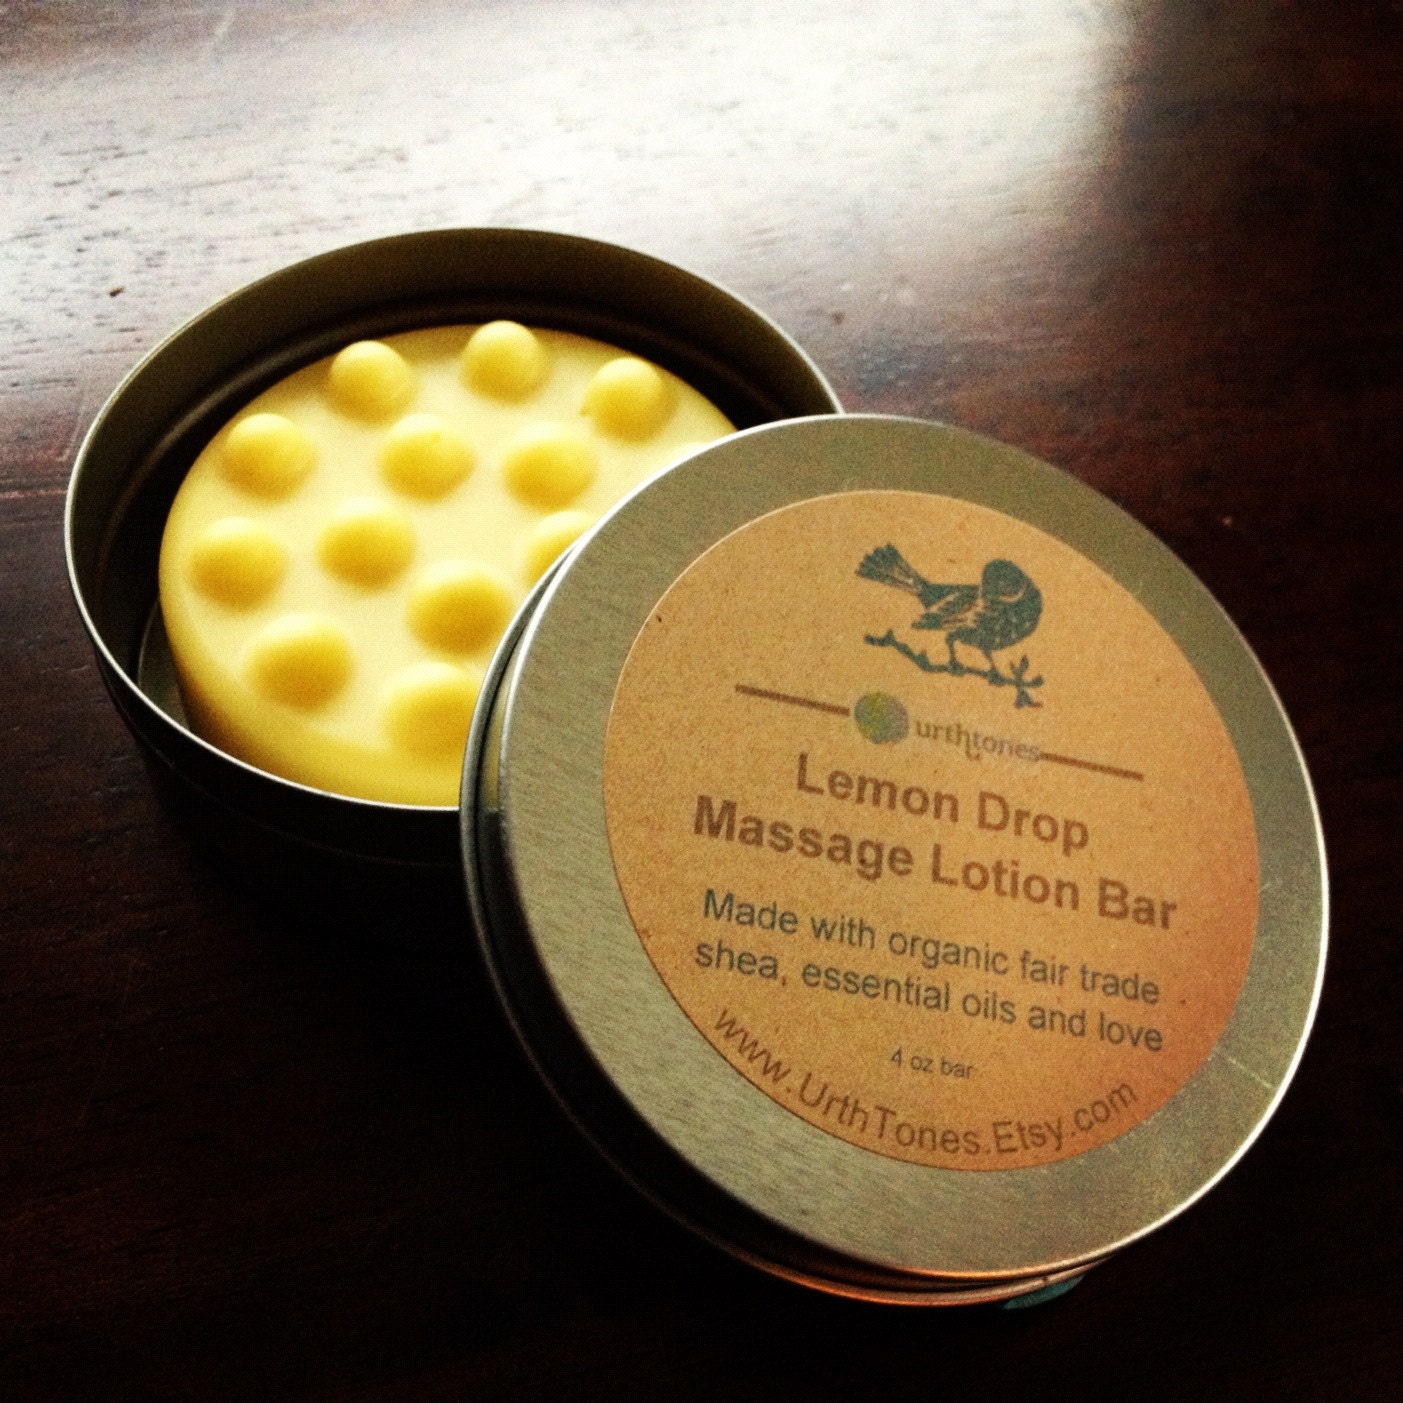 Lemon Drop Massage Lotion Bar with Organic Fair Trade Shea Butter /// Essential Oils of Jasmine, Grapefruit and Lemongrass